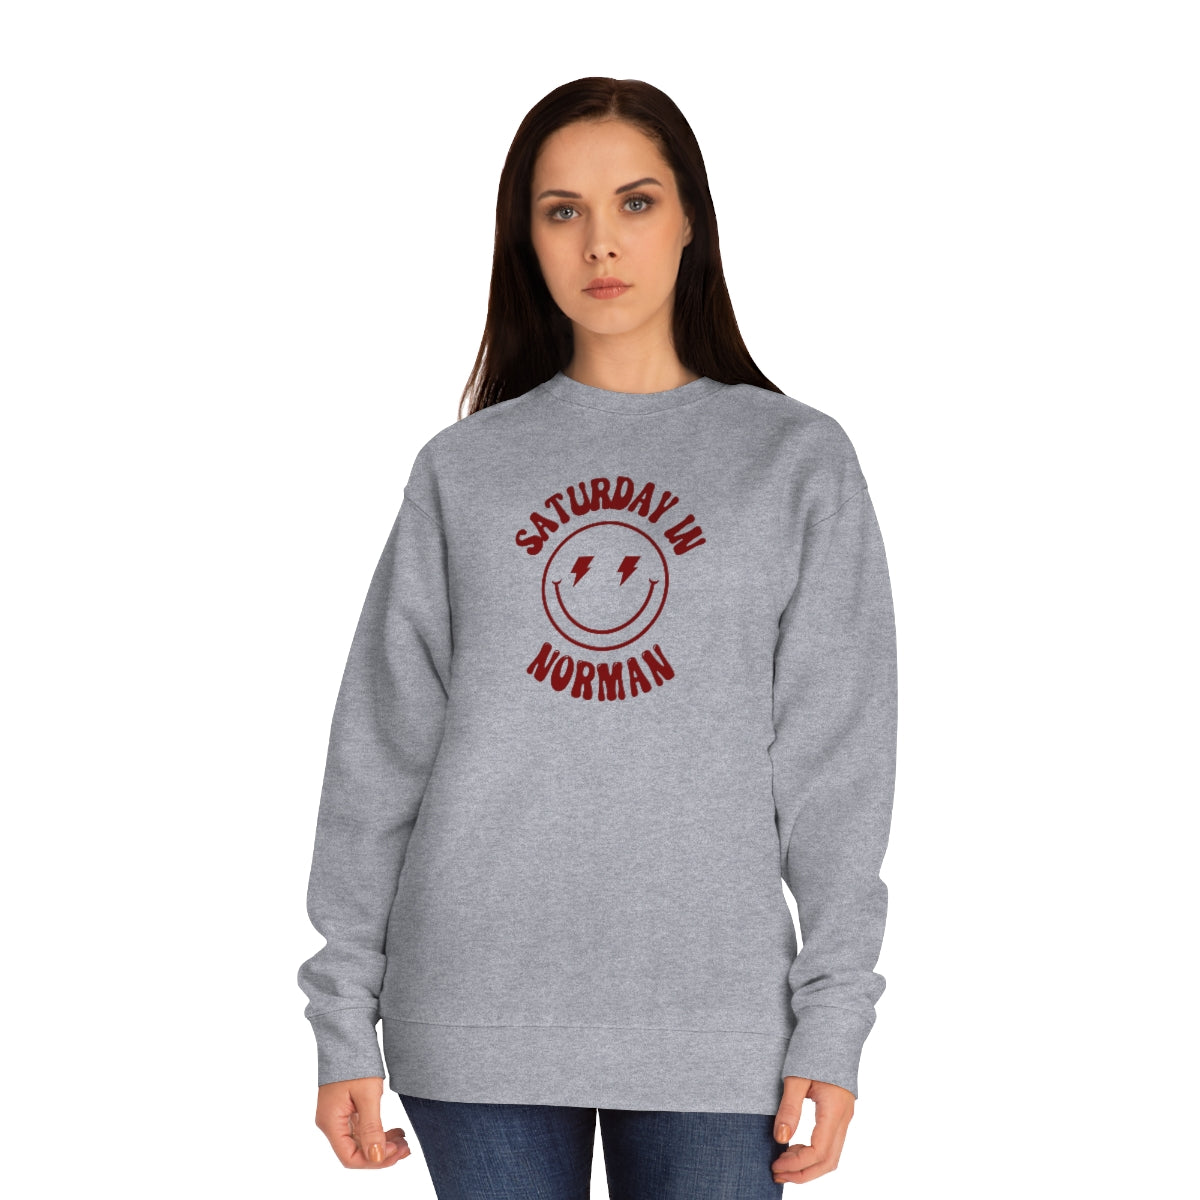 Smiley Norman Crew Sweatshirt - GG - CH